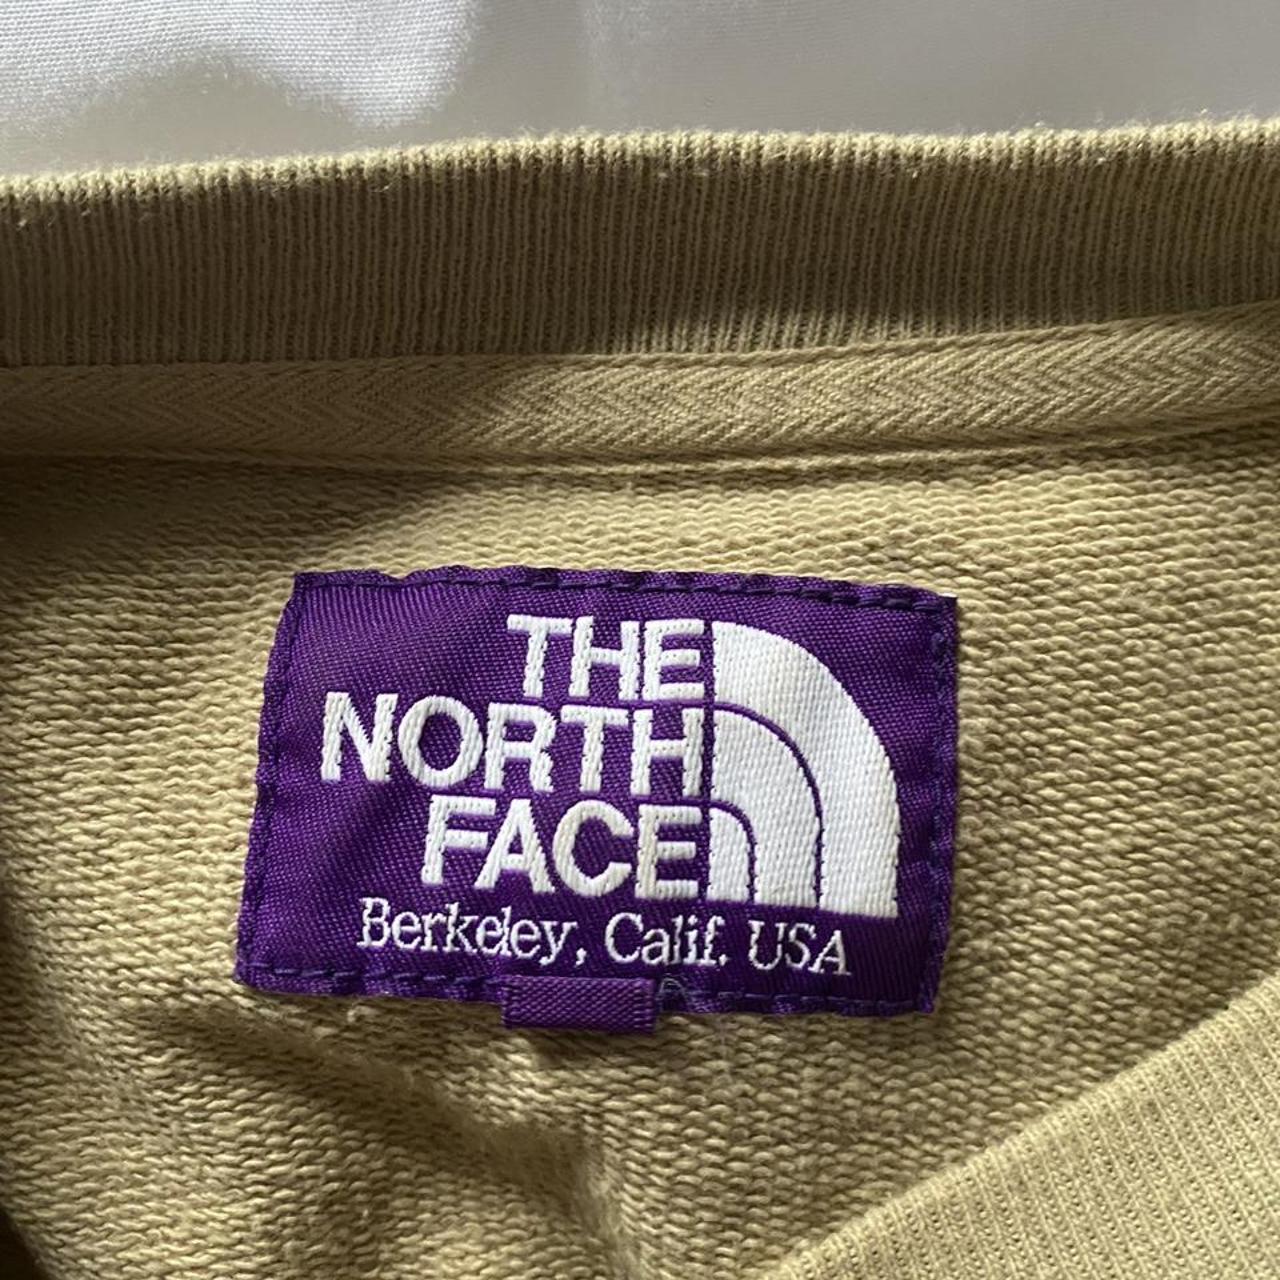 The North Face Purple Label Men's Sweatshirt (2)